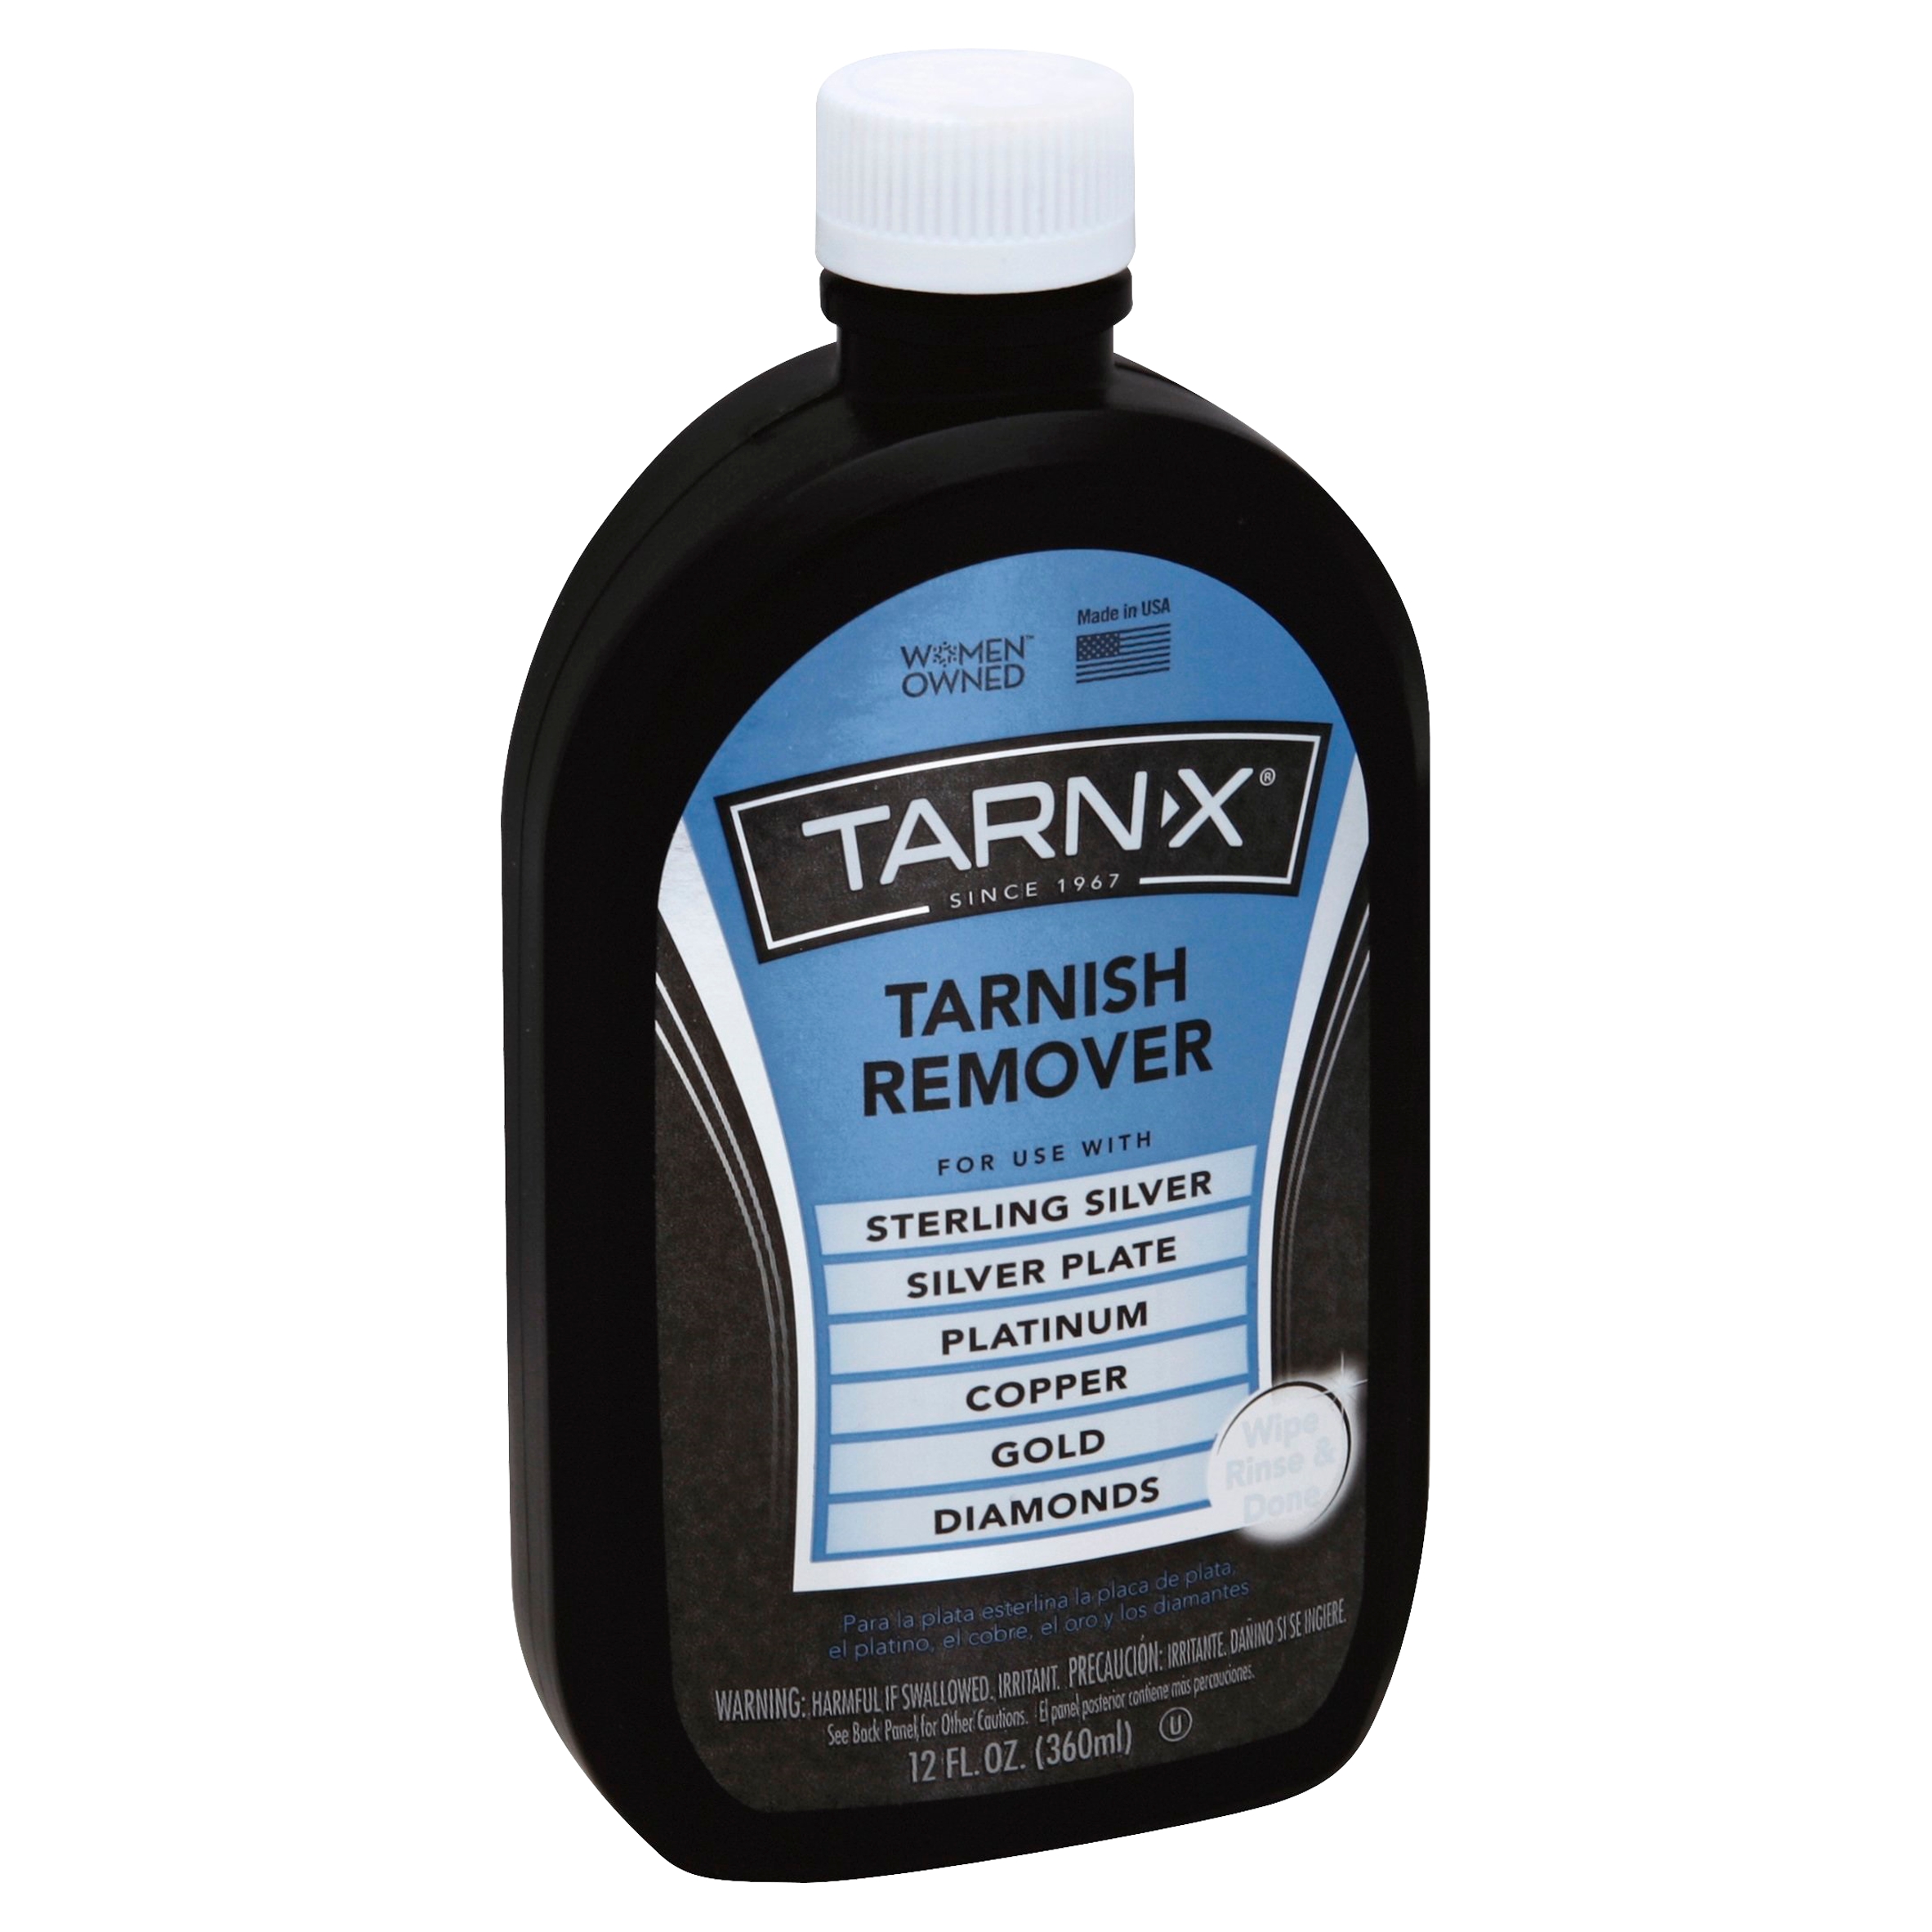 How to Remove Tarnish with Tarn-X Tarnish Remover  Tarnish remover, How to  clean silver, Cleaning clothes